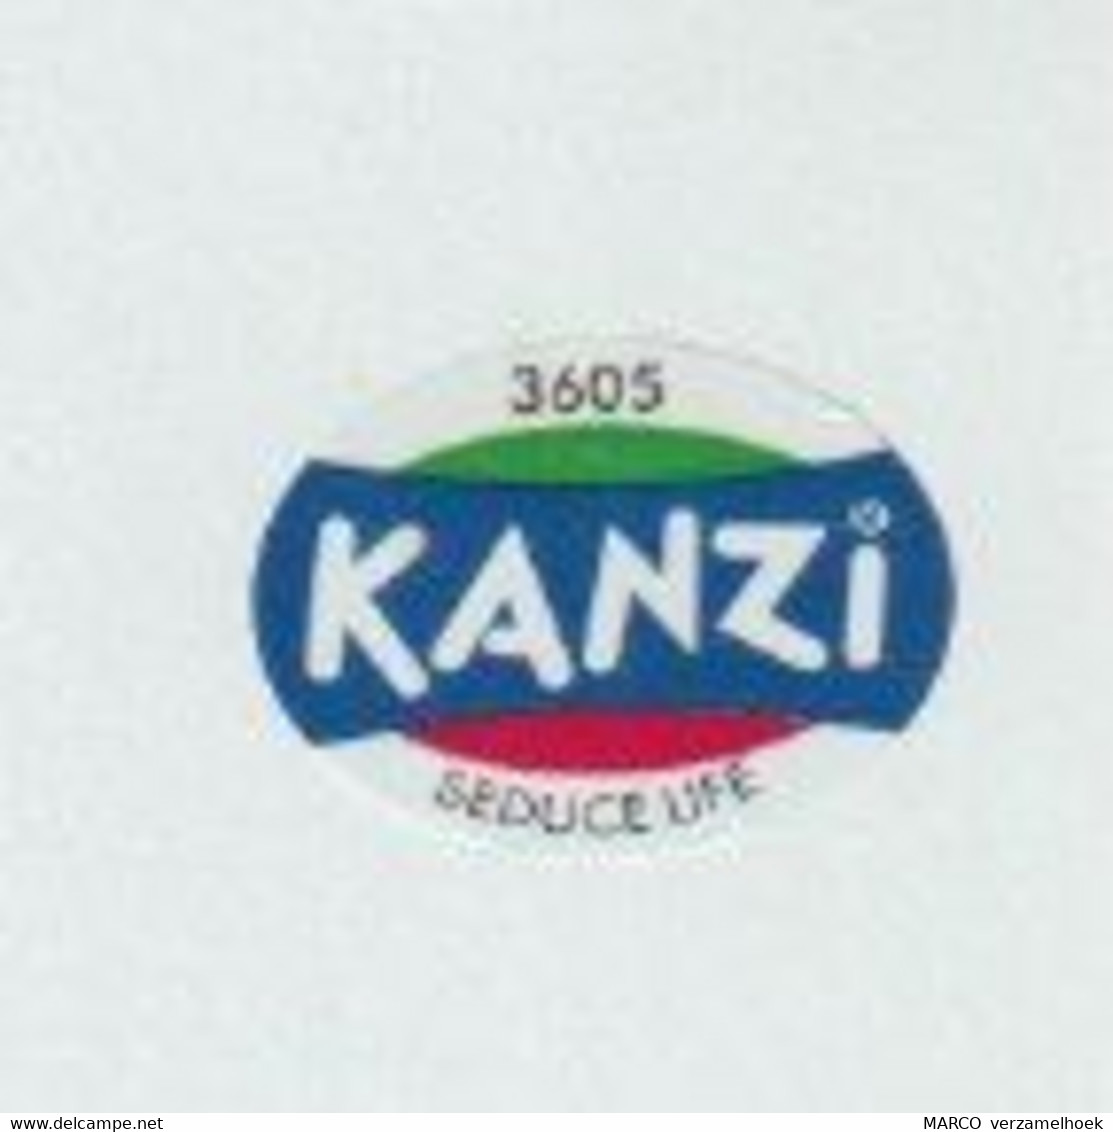 1x Fruit Label Sticker KANZI Seduce Life 3605 Apple (NL) - Fruits & Vegetables